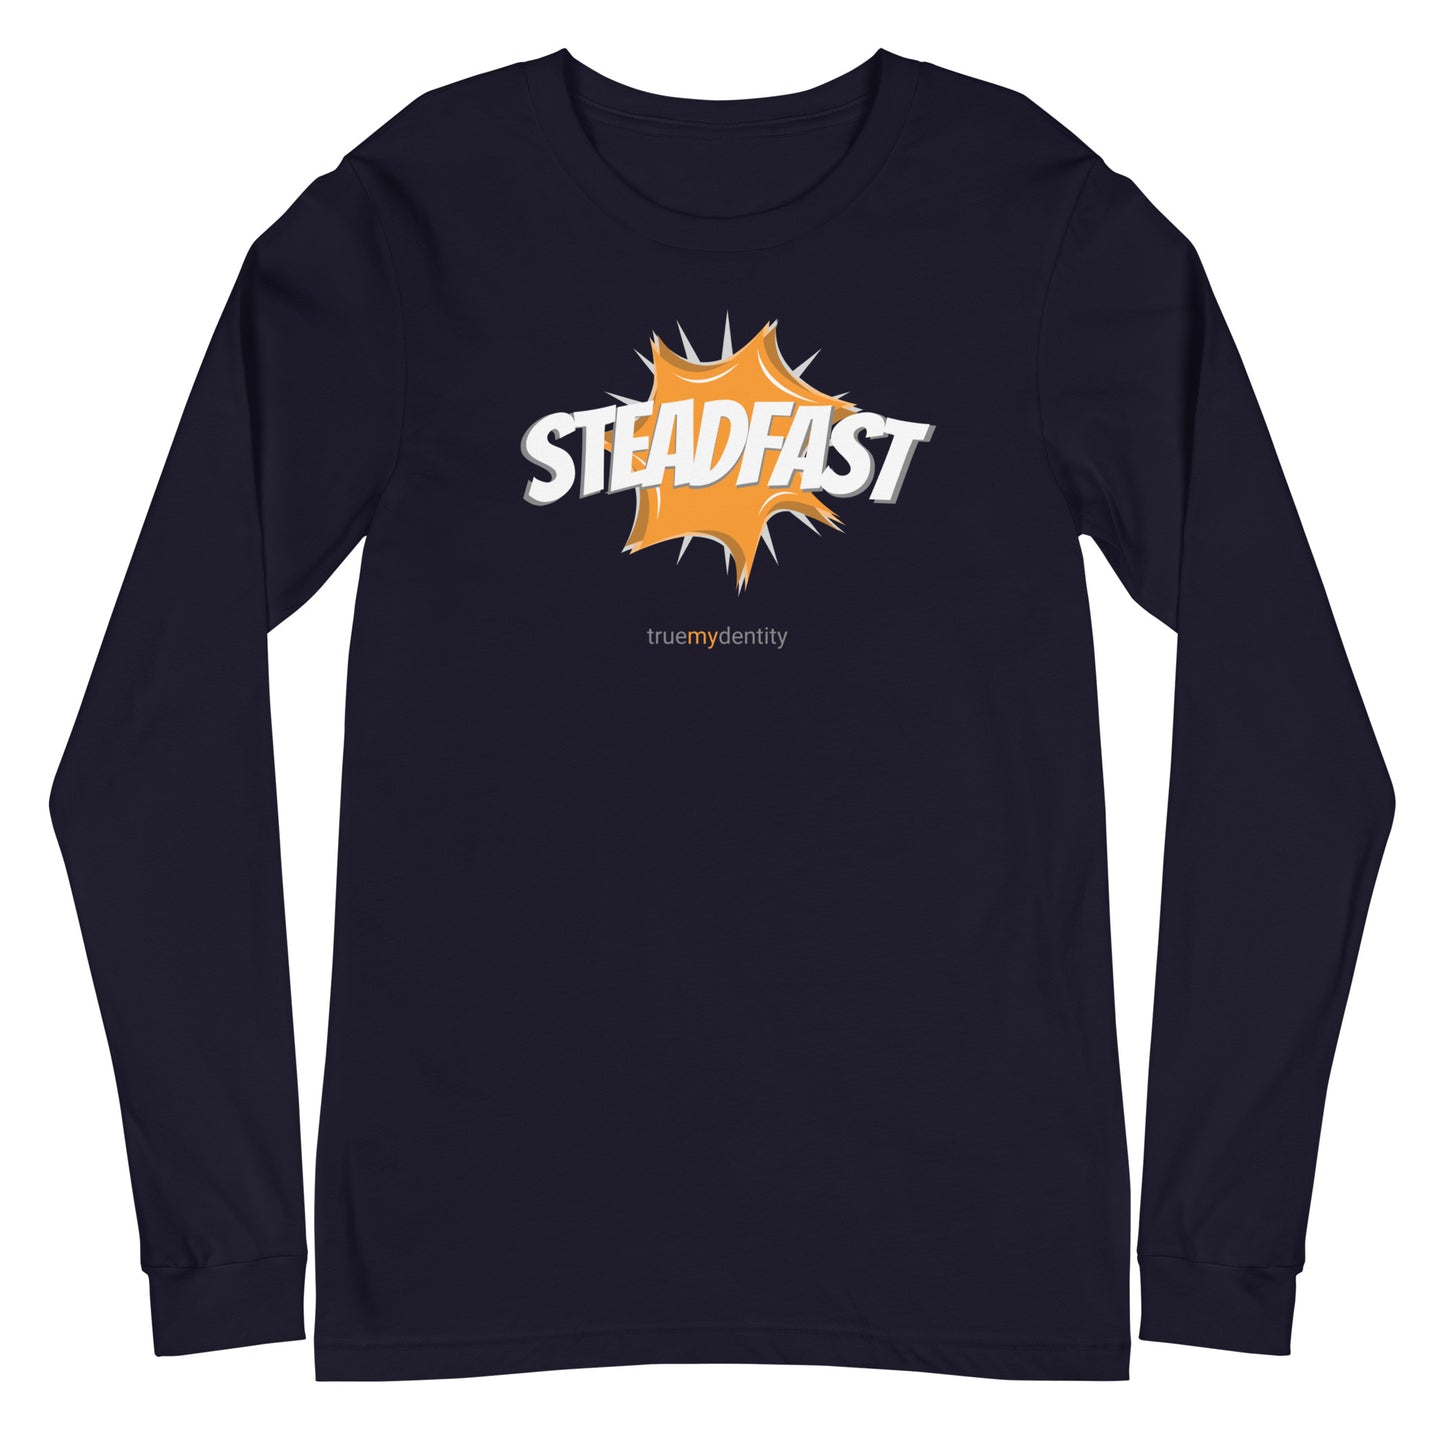 STEADFAST Long Sleeve Shirt Action Design | Unisex